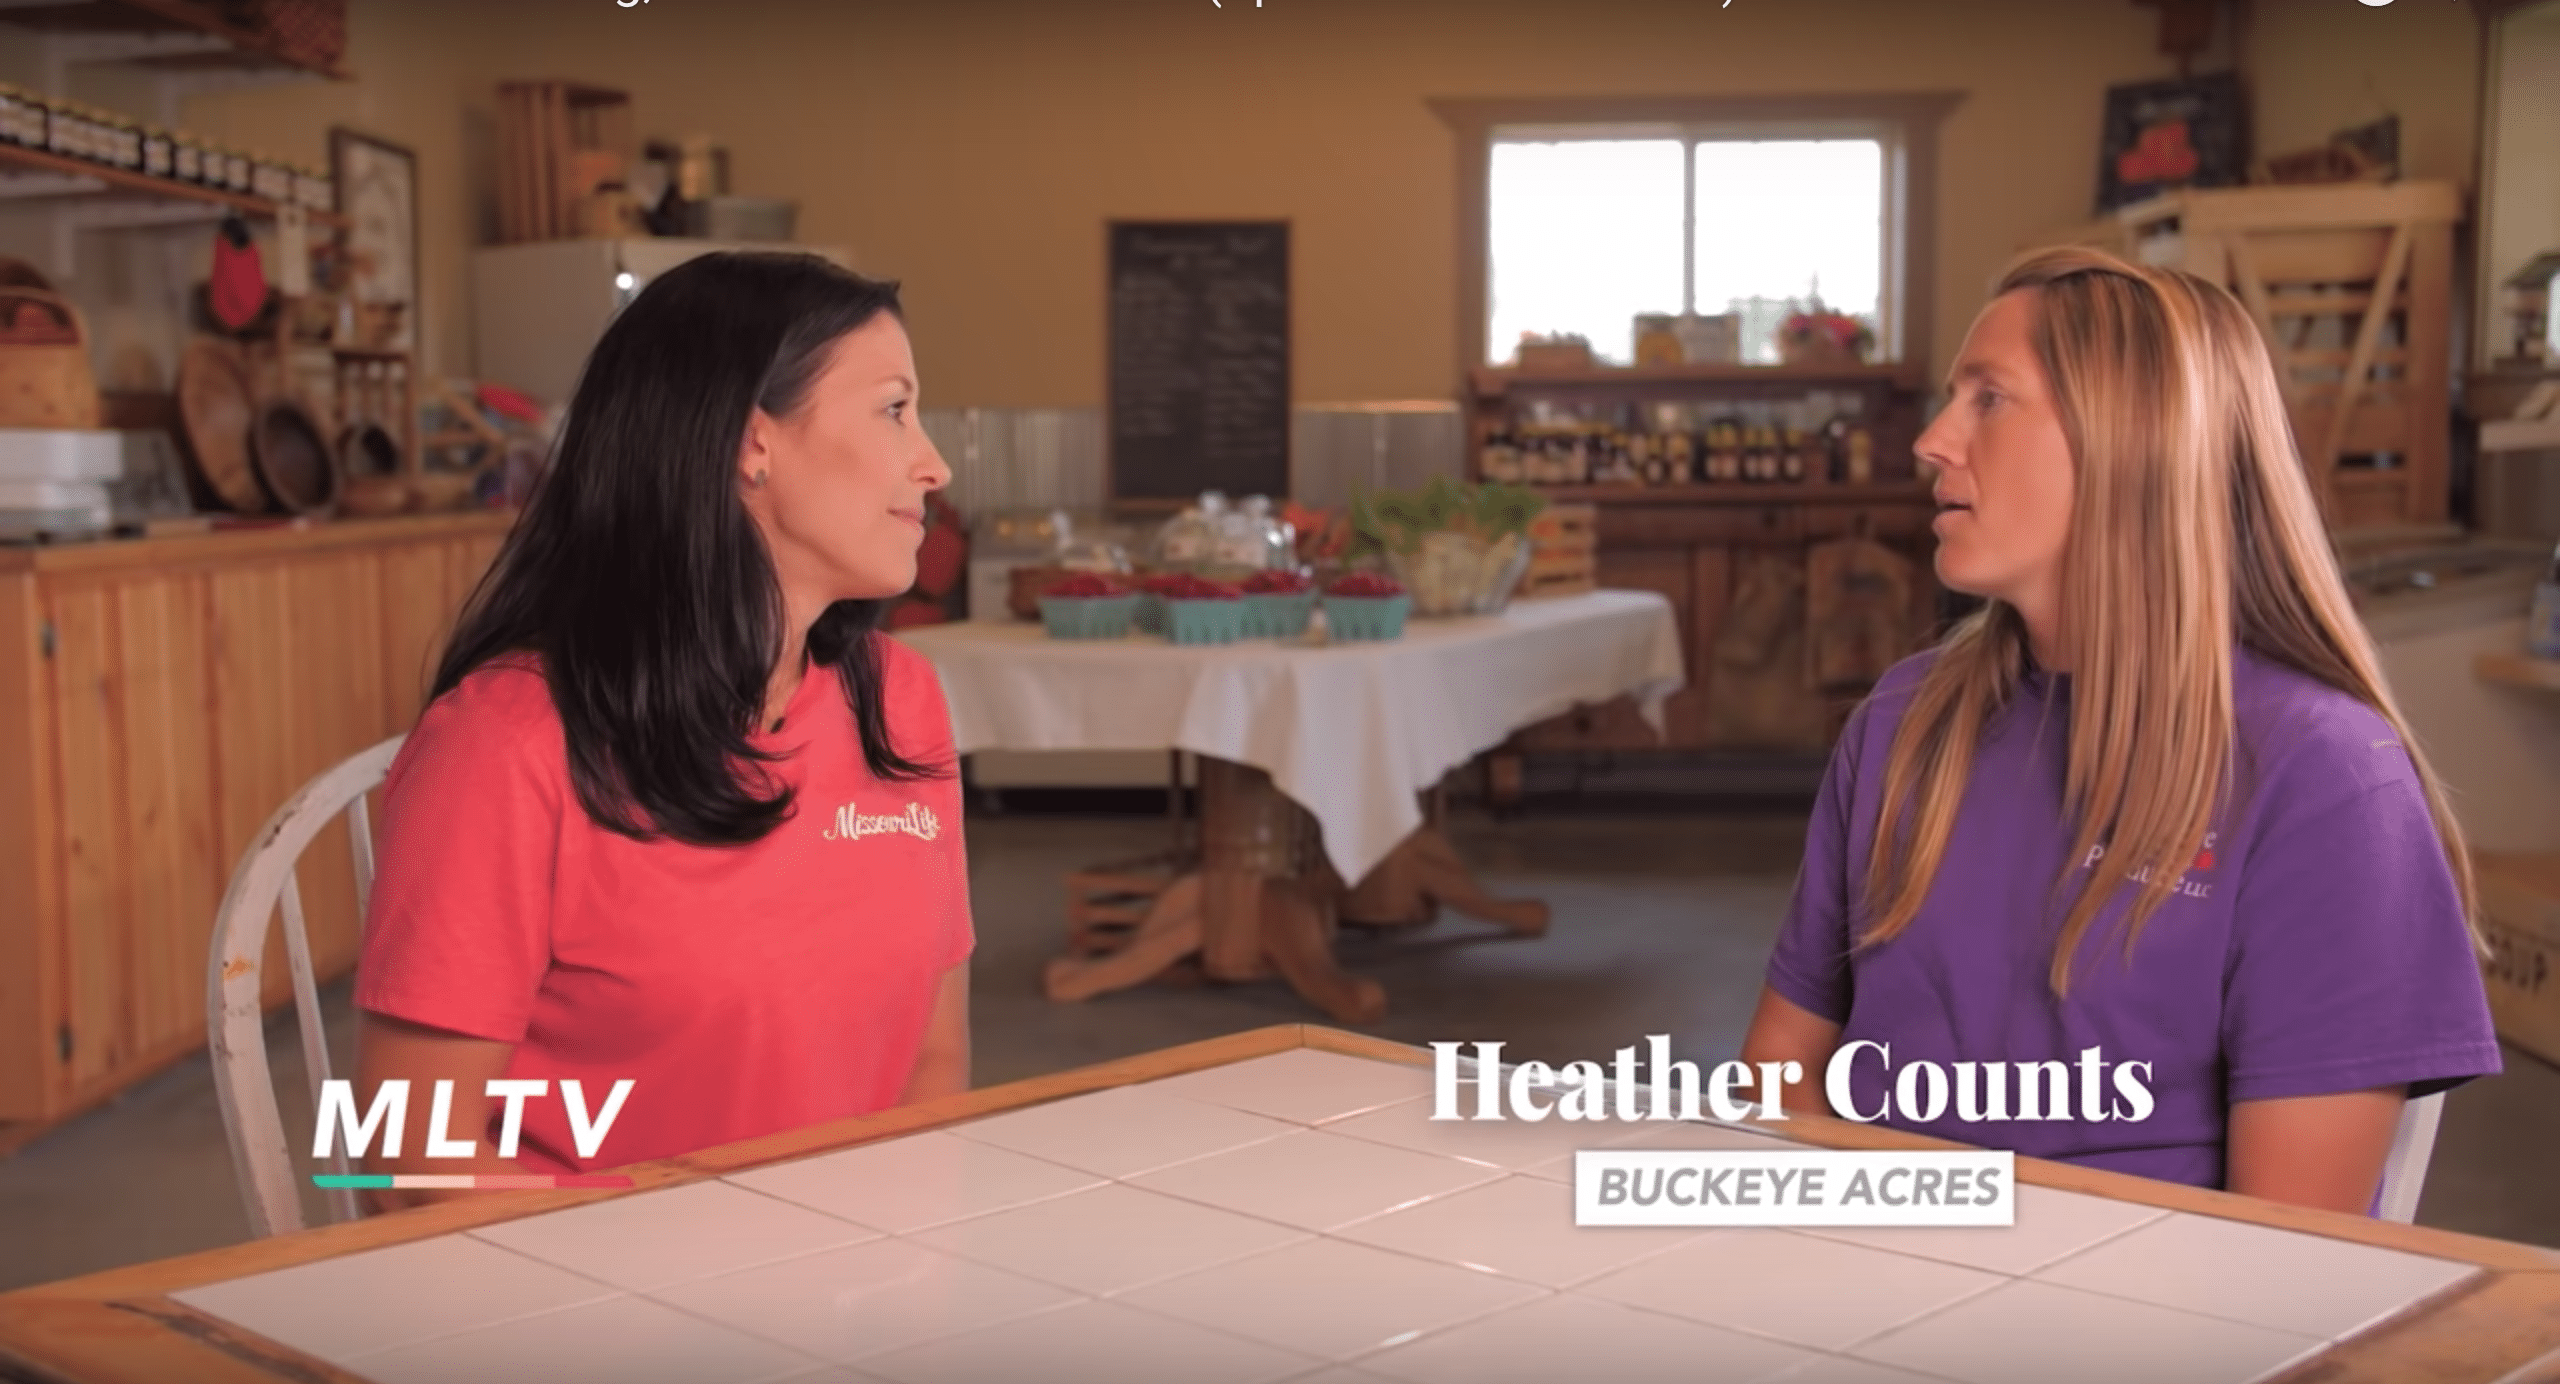 MLTV interviews Heather Counts from Buckeye Acres in Episode 2 of Missouri Life TV season 5